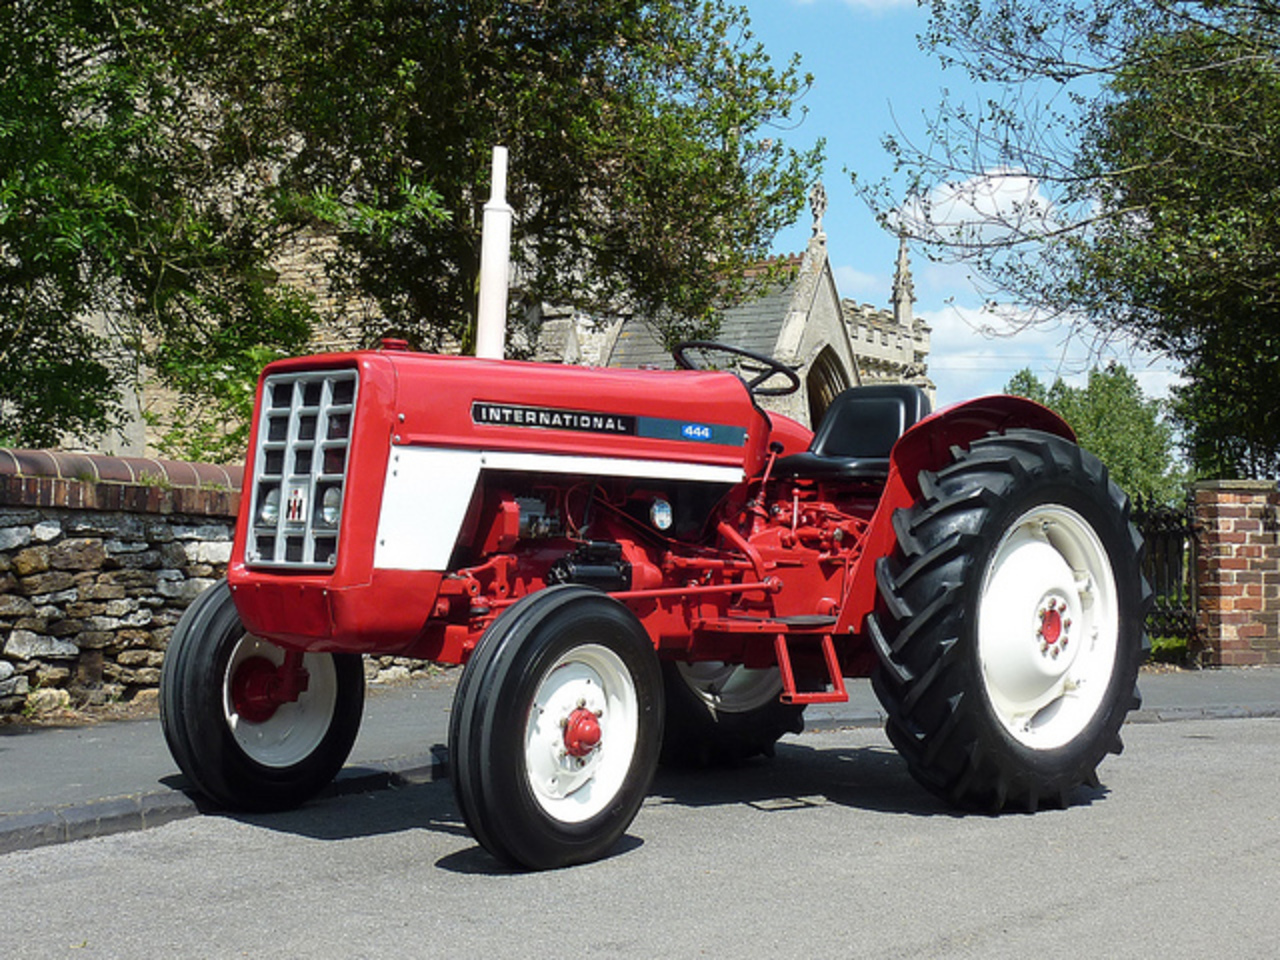 International tractors B-250 etc - a gallery on Flickr